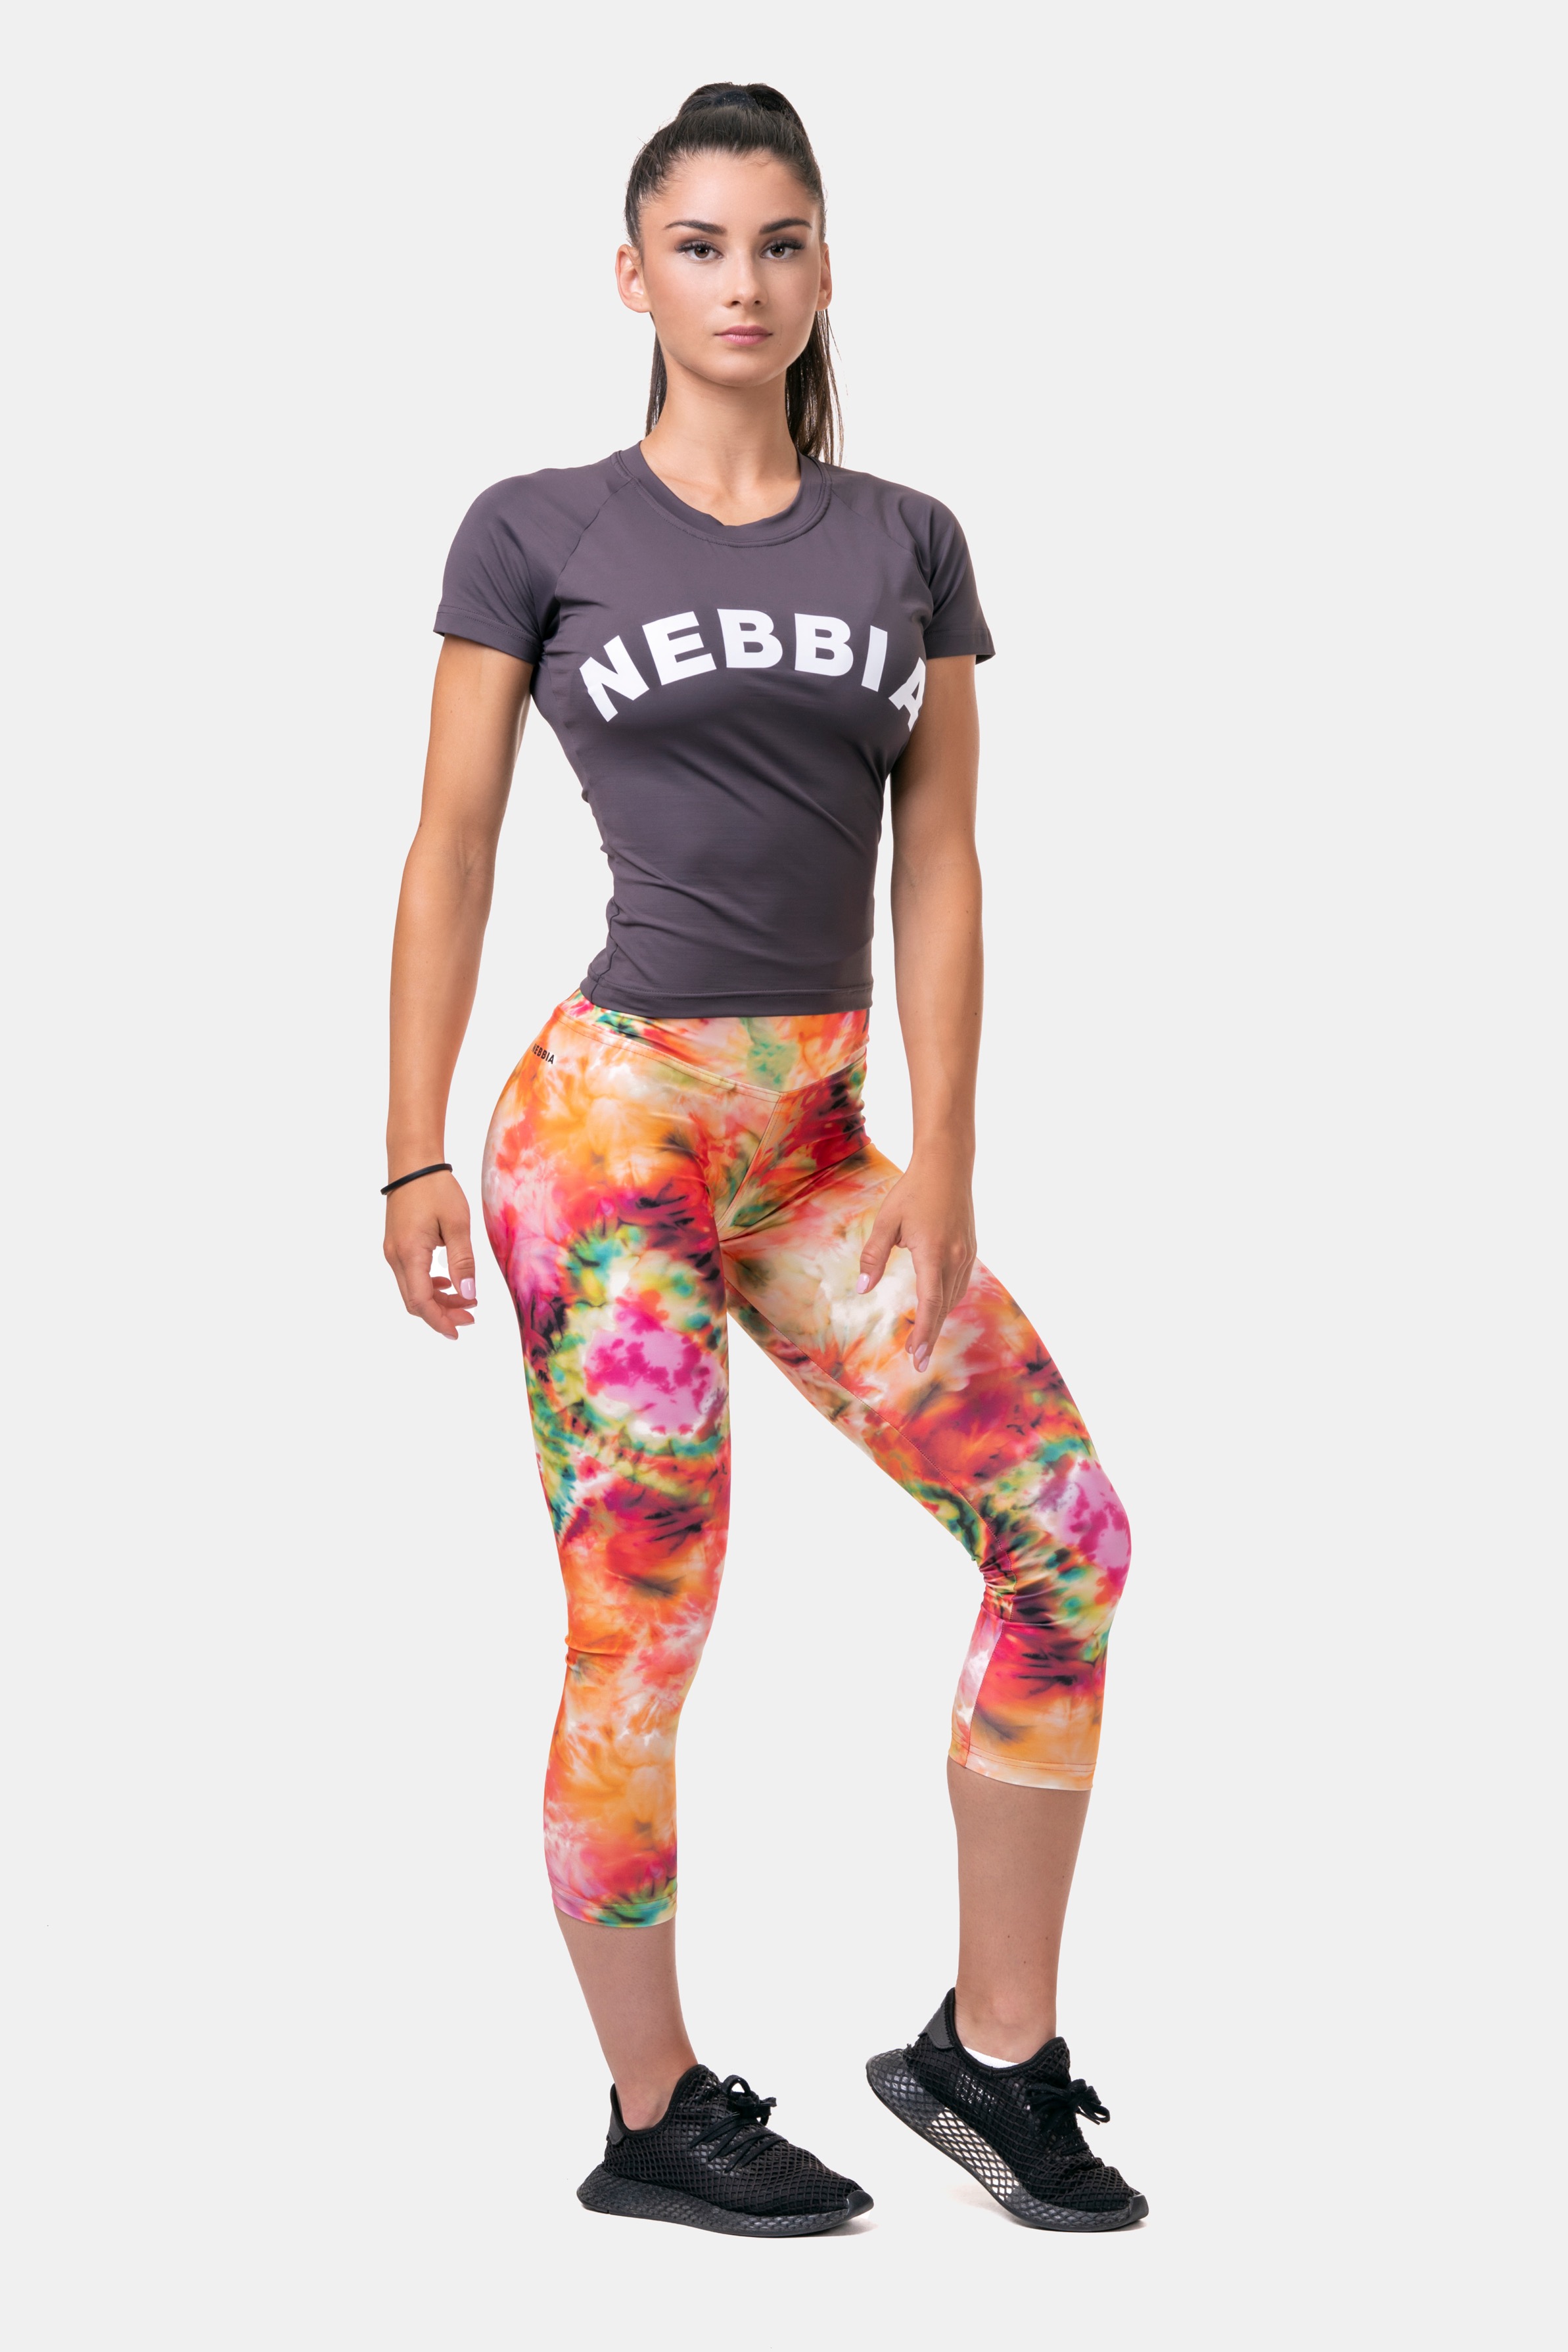 nebbia-capri-fitness-leggings-be-your-own-hero-574-rainbow